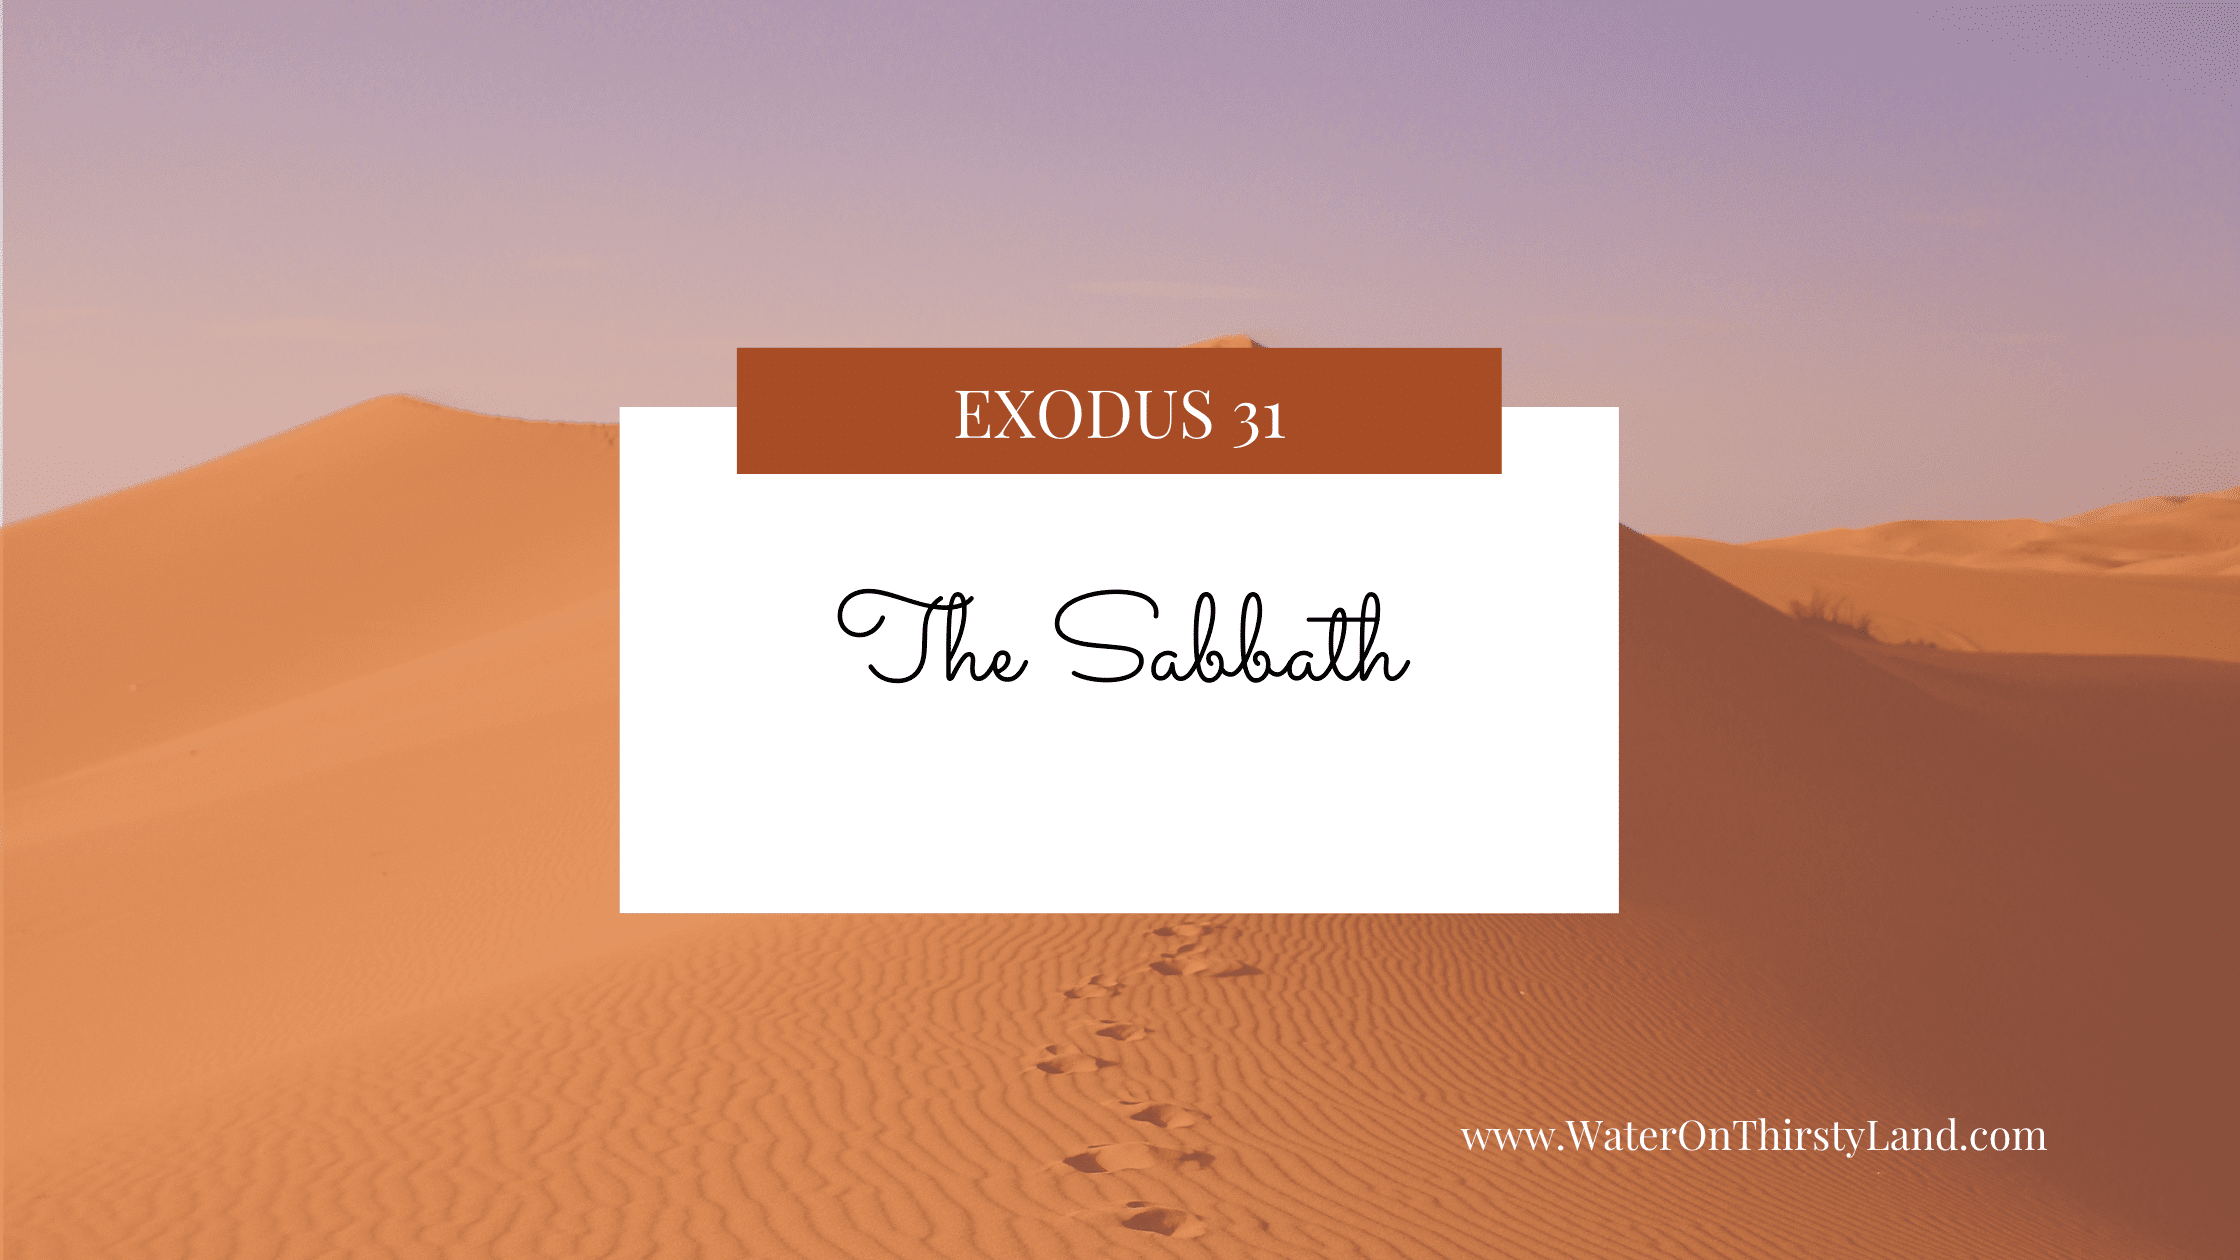 Exodus 31: The Sabbath